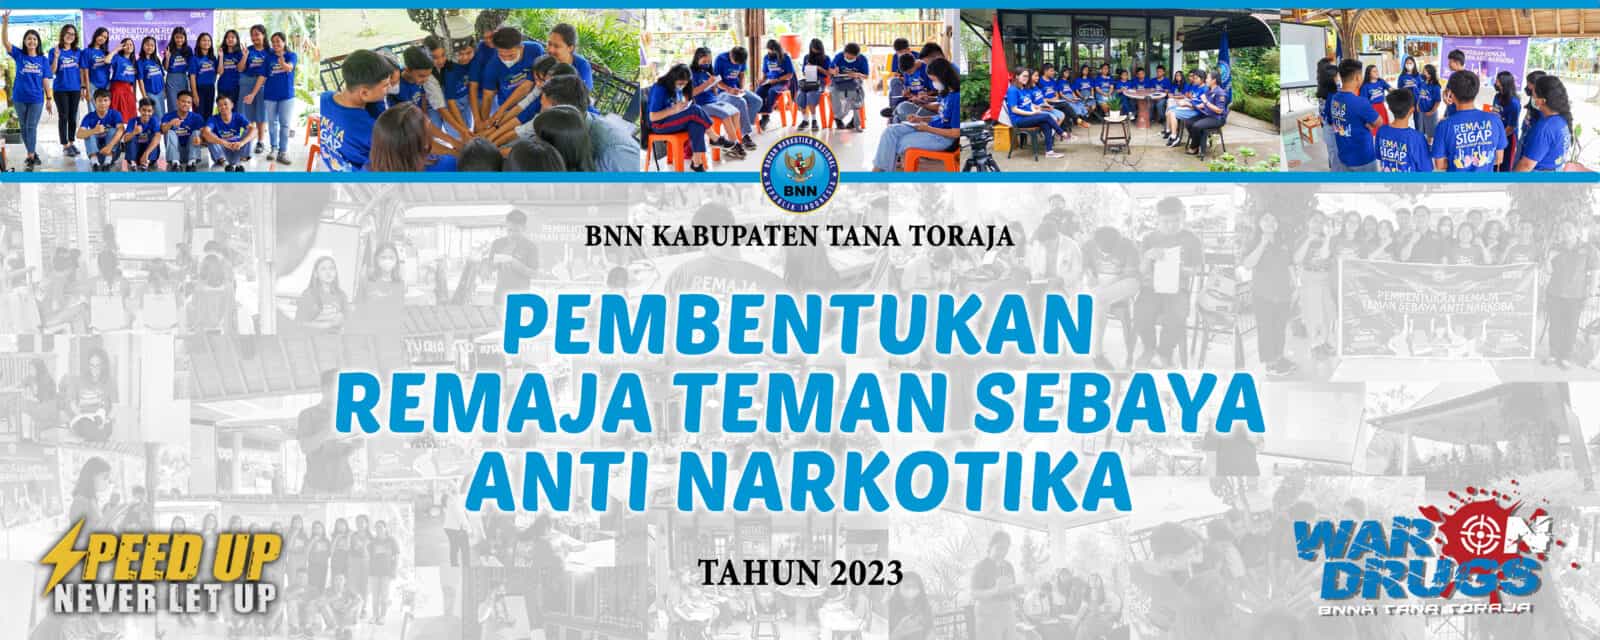 Pembentukan Remaja Teman Sebaya Anti Narkotika – BNNK Tana Toraja Tahun 2023